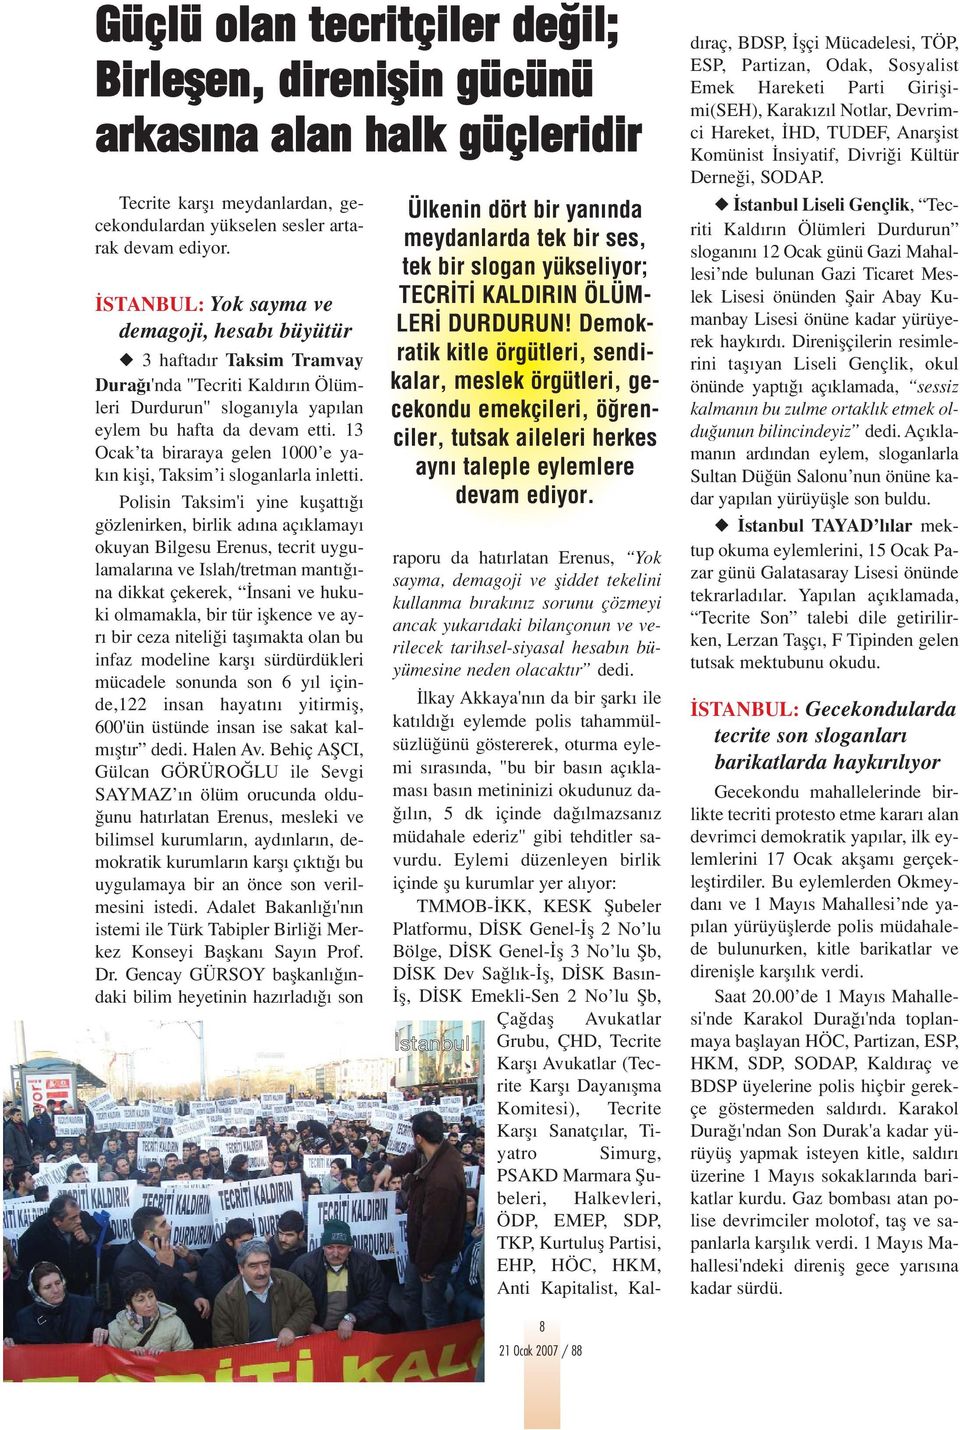 13 Ocak ta biraraya gelen 1000 e yak n kifli, Taksim i sloganlarla inletti.